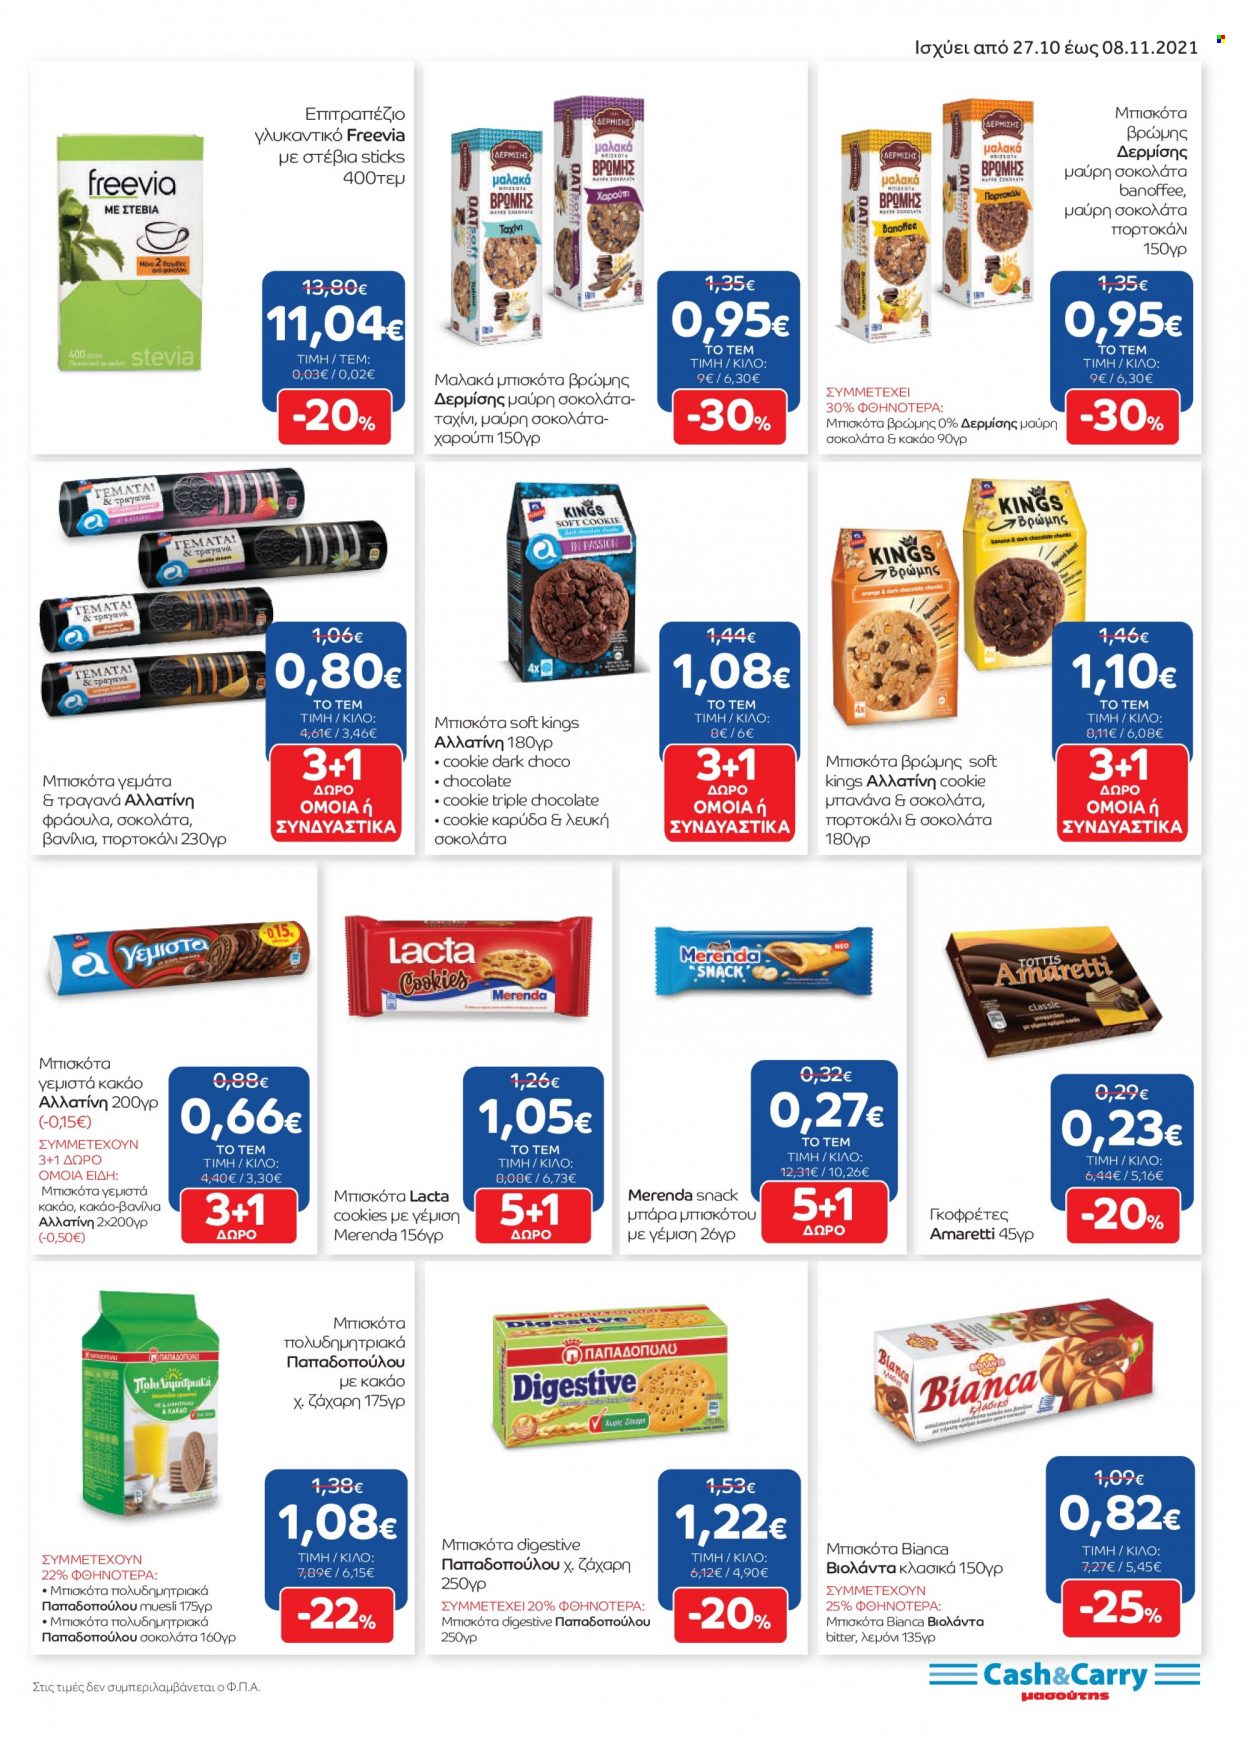 thumbnail - Φυλλάδια Masoutis Cash & Carry - 27.10.2021 - 08.11.2021 - Εκπτωτικά προϊόντα - μπισκότα, μπανάνες, Amaretti, cookies, γκοφρέτες, λευκή σοκολάτα, σοκολάτα, ζάχαρη, κακάο. Σελίδα 11.